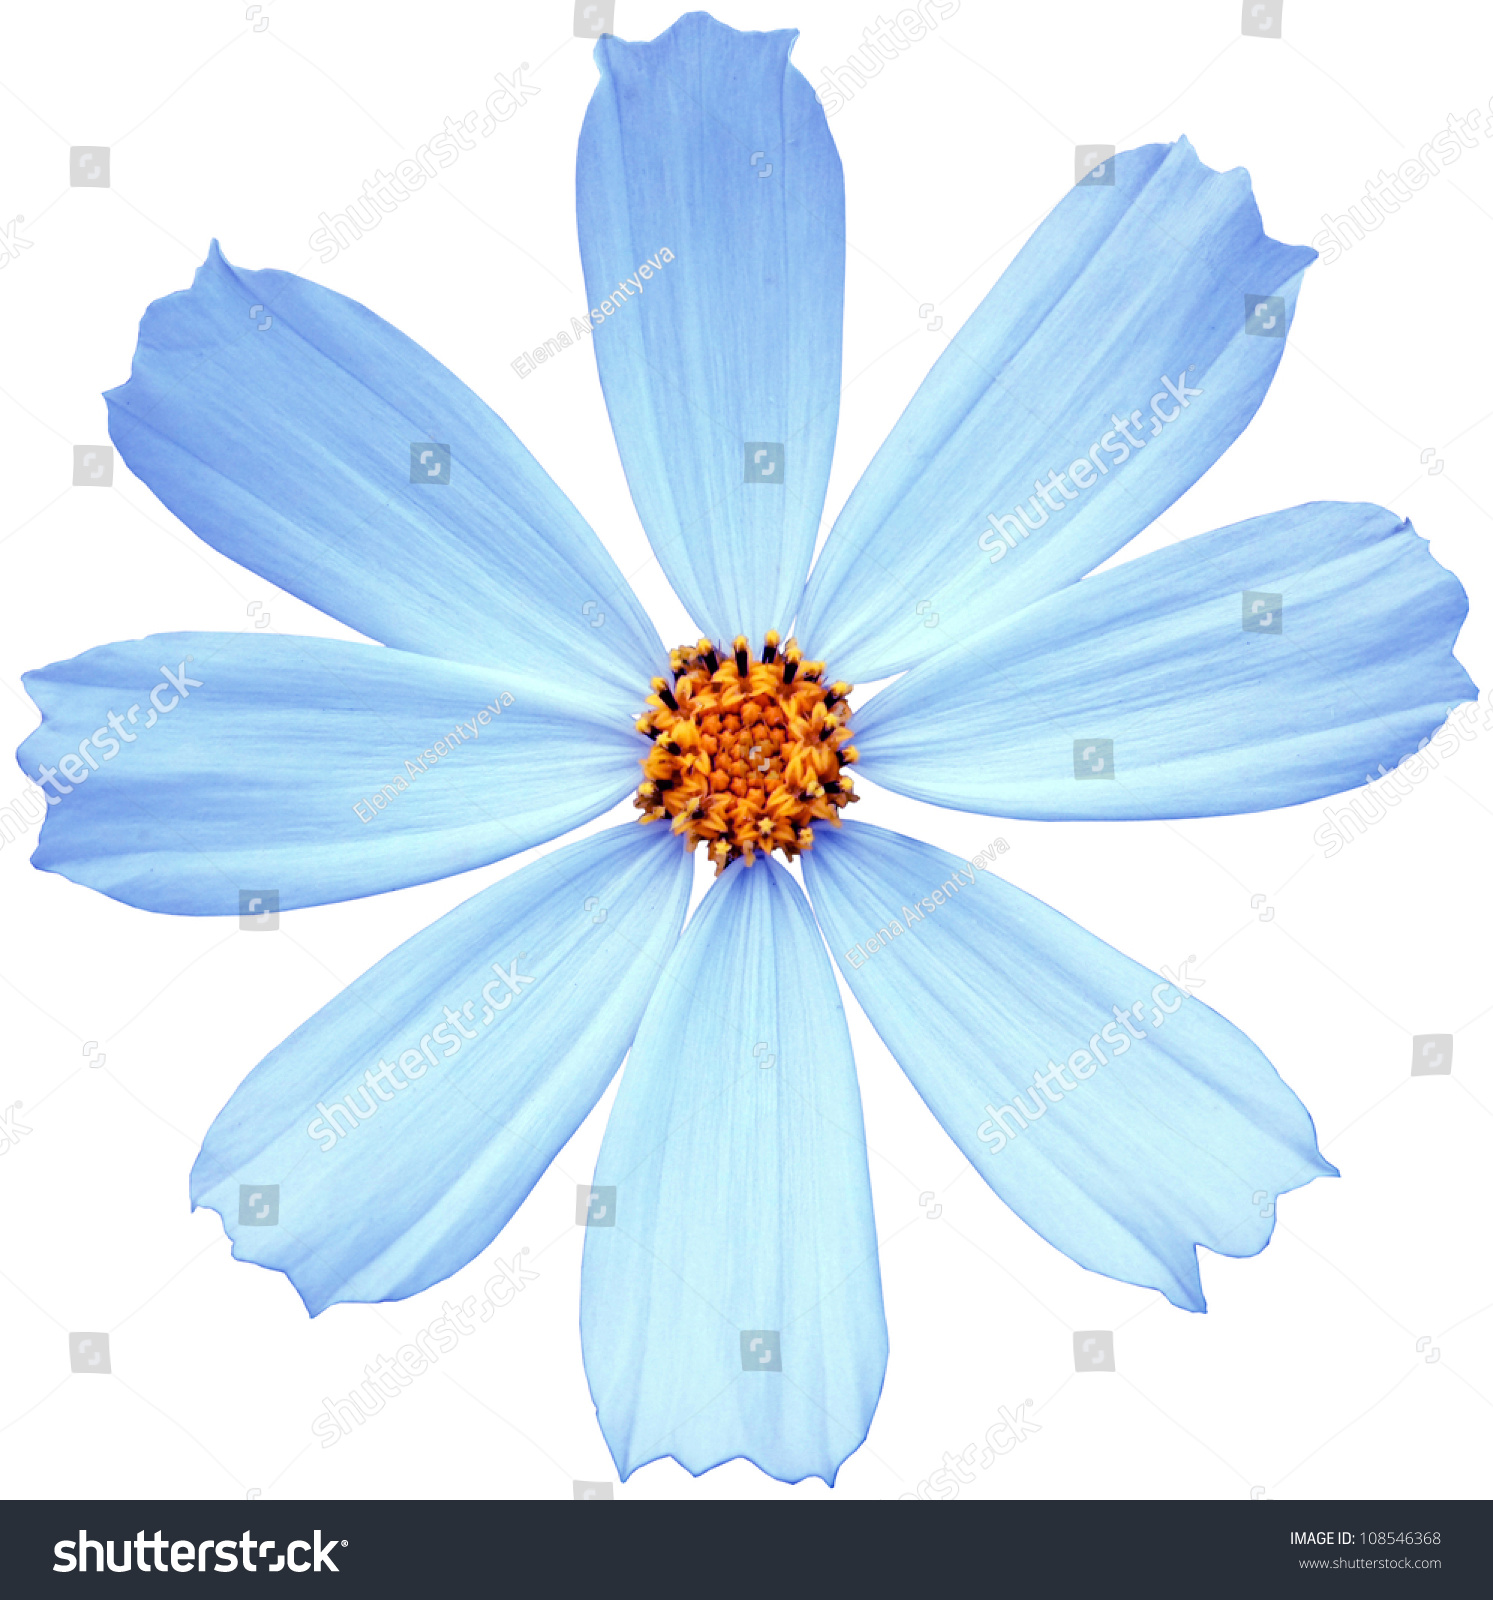 Blue Flower Isolated On White Background Stock Photo 108546368 - Shutterstock